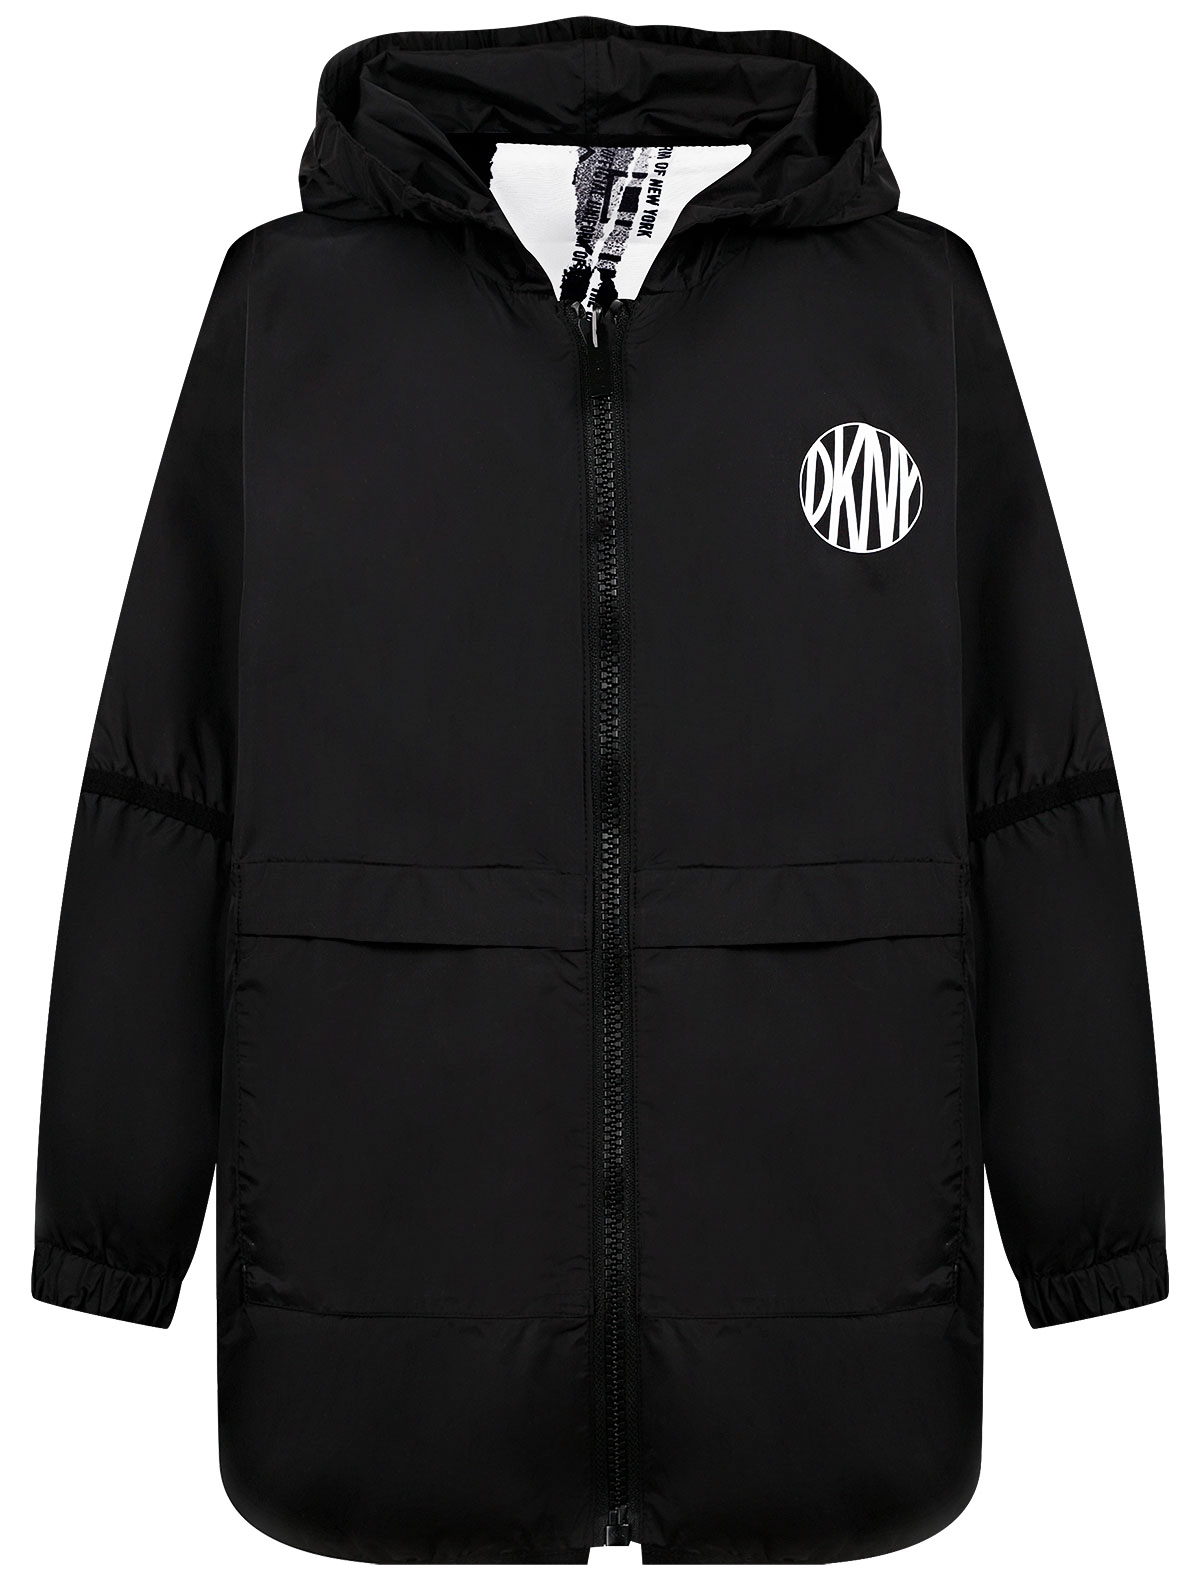 Куртка DKNY 2401196, цвет черный, размер 13 1074509271093 - фото 1